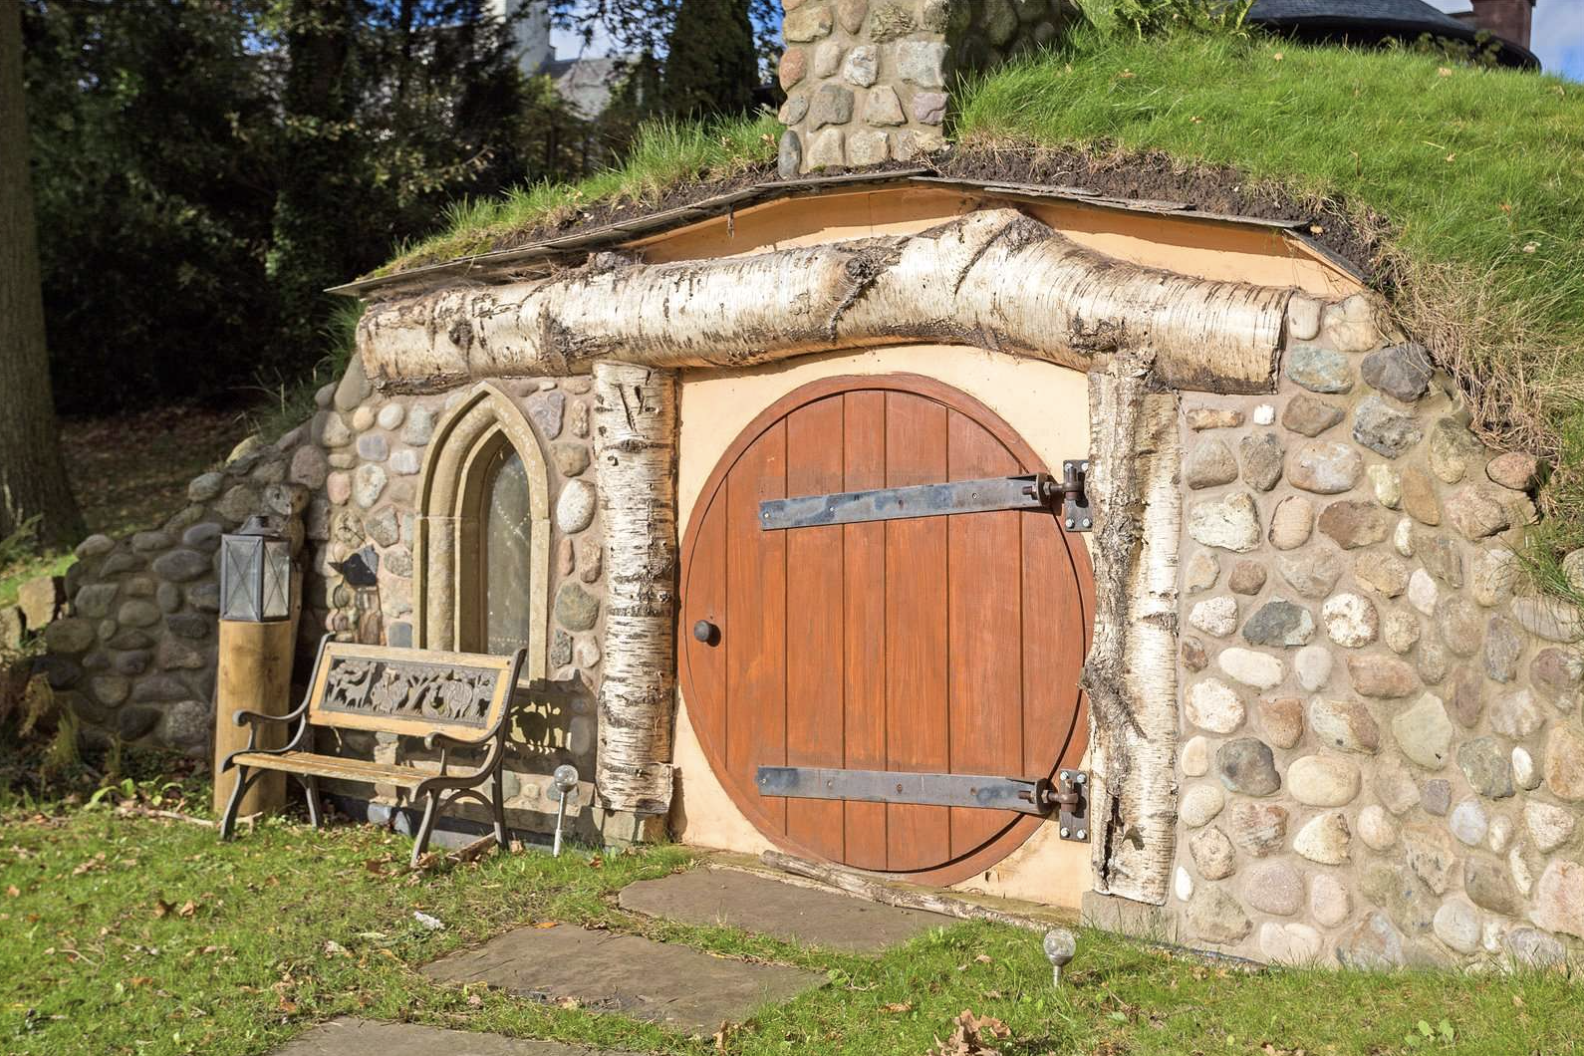 The actual Hobbit house.